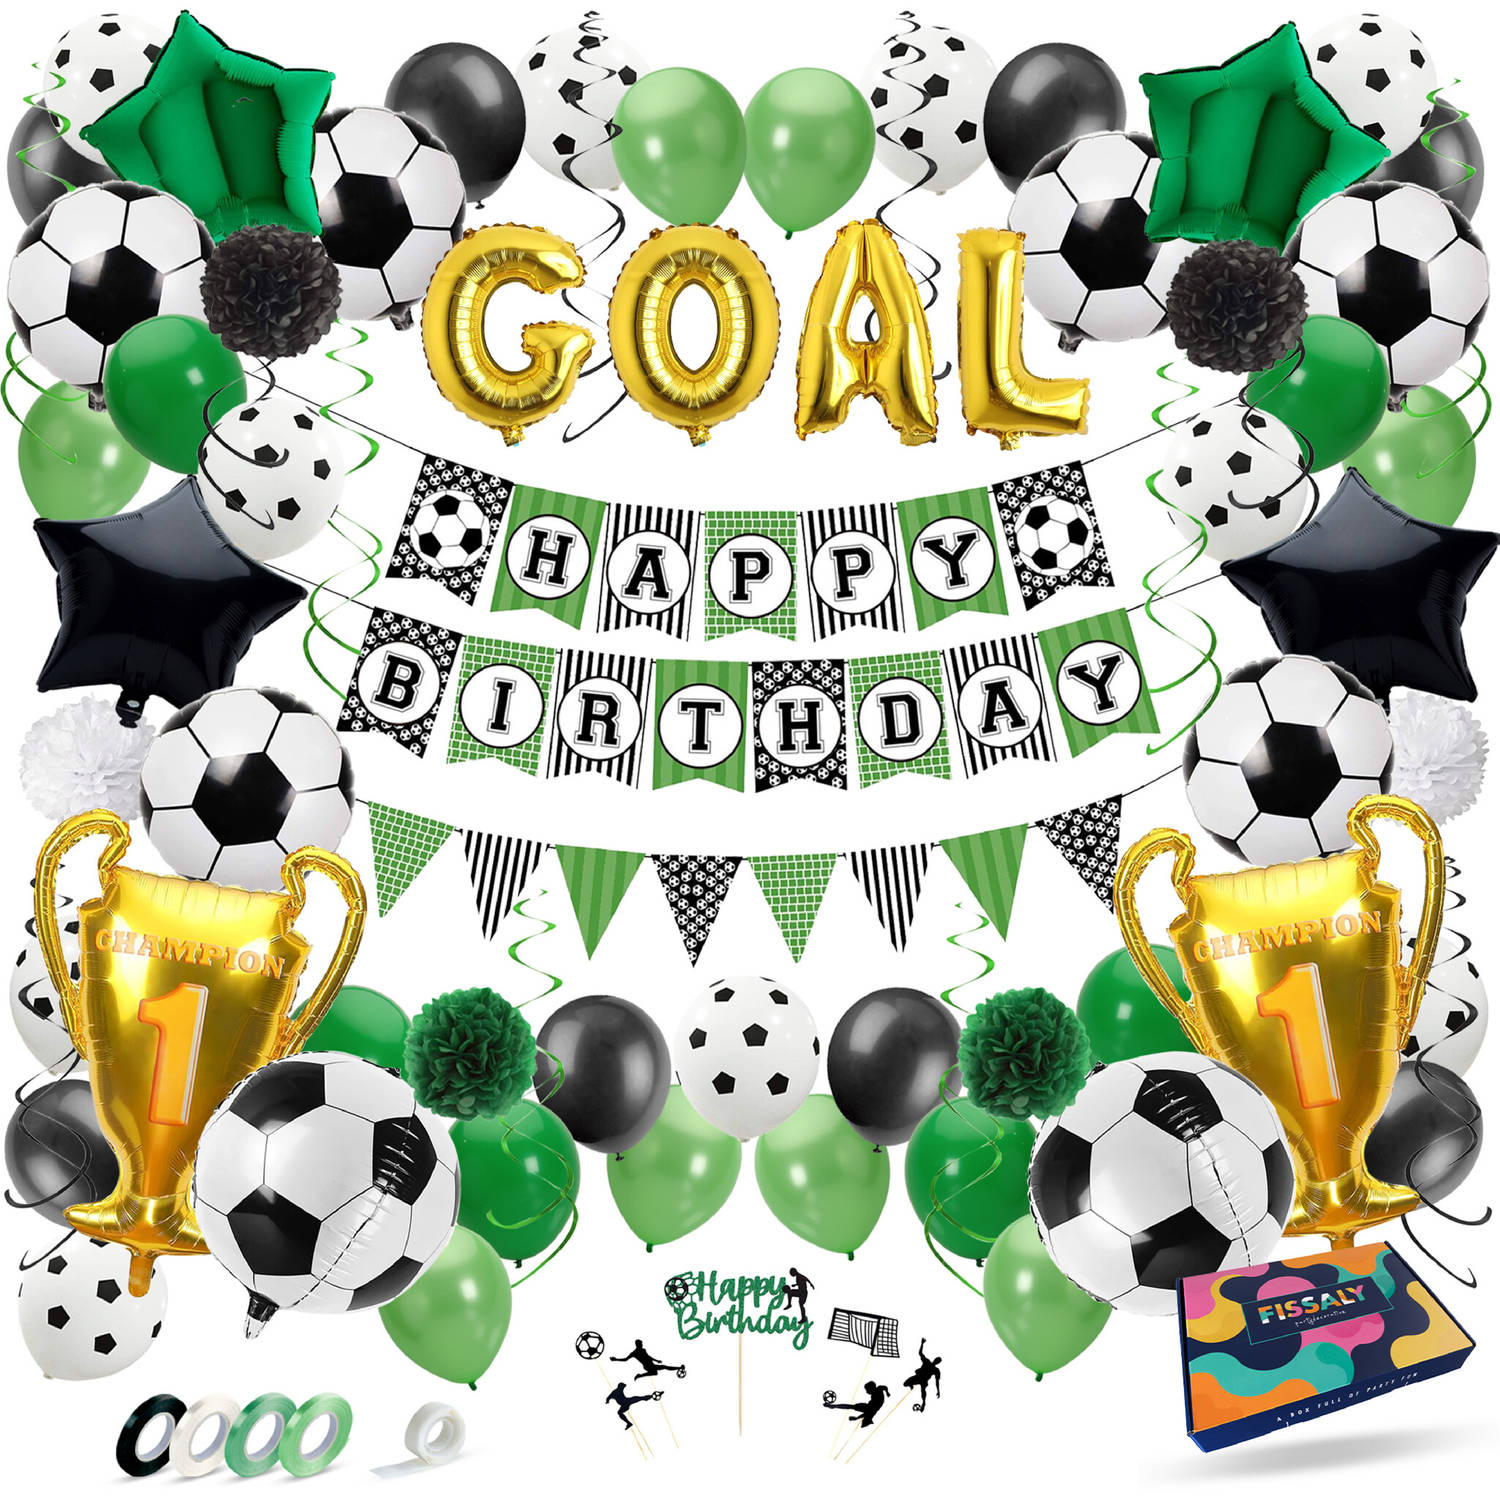 Fissaly® Voetbal Decoratie Versiering - Jongens & Meisjes Kinderfeestje Verjaardag - Feest Pakket incl. Ballonnen